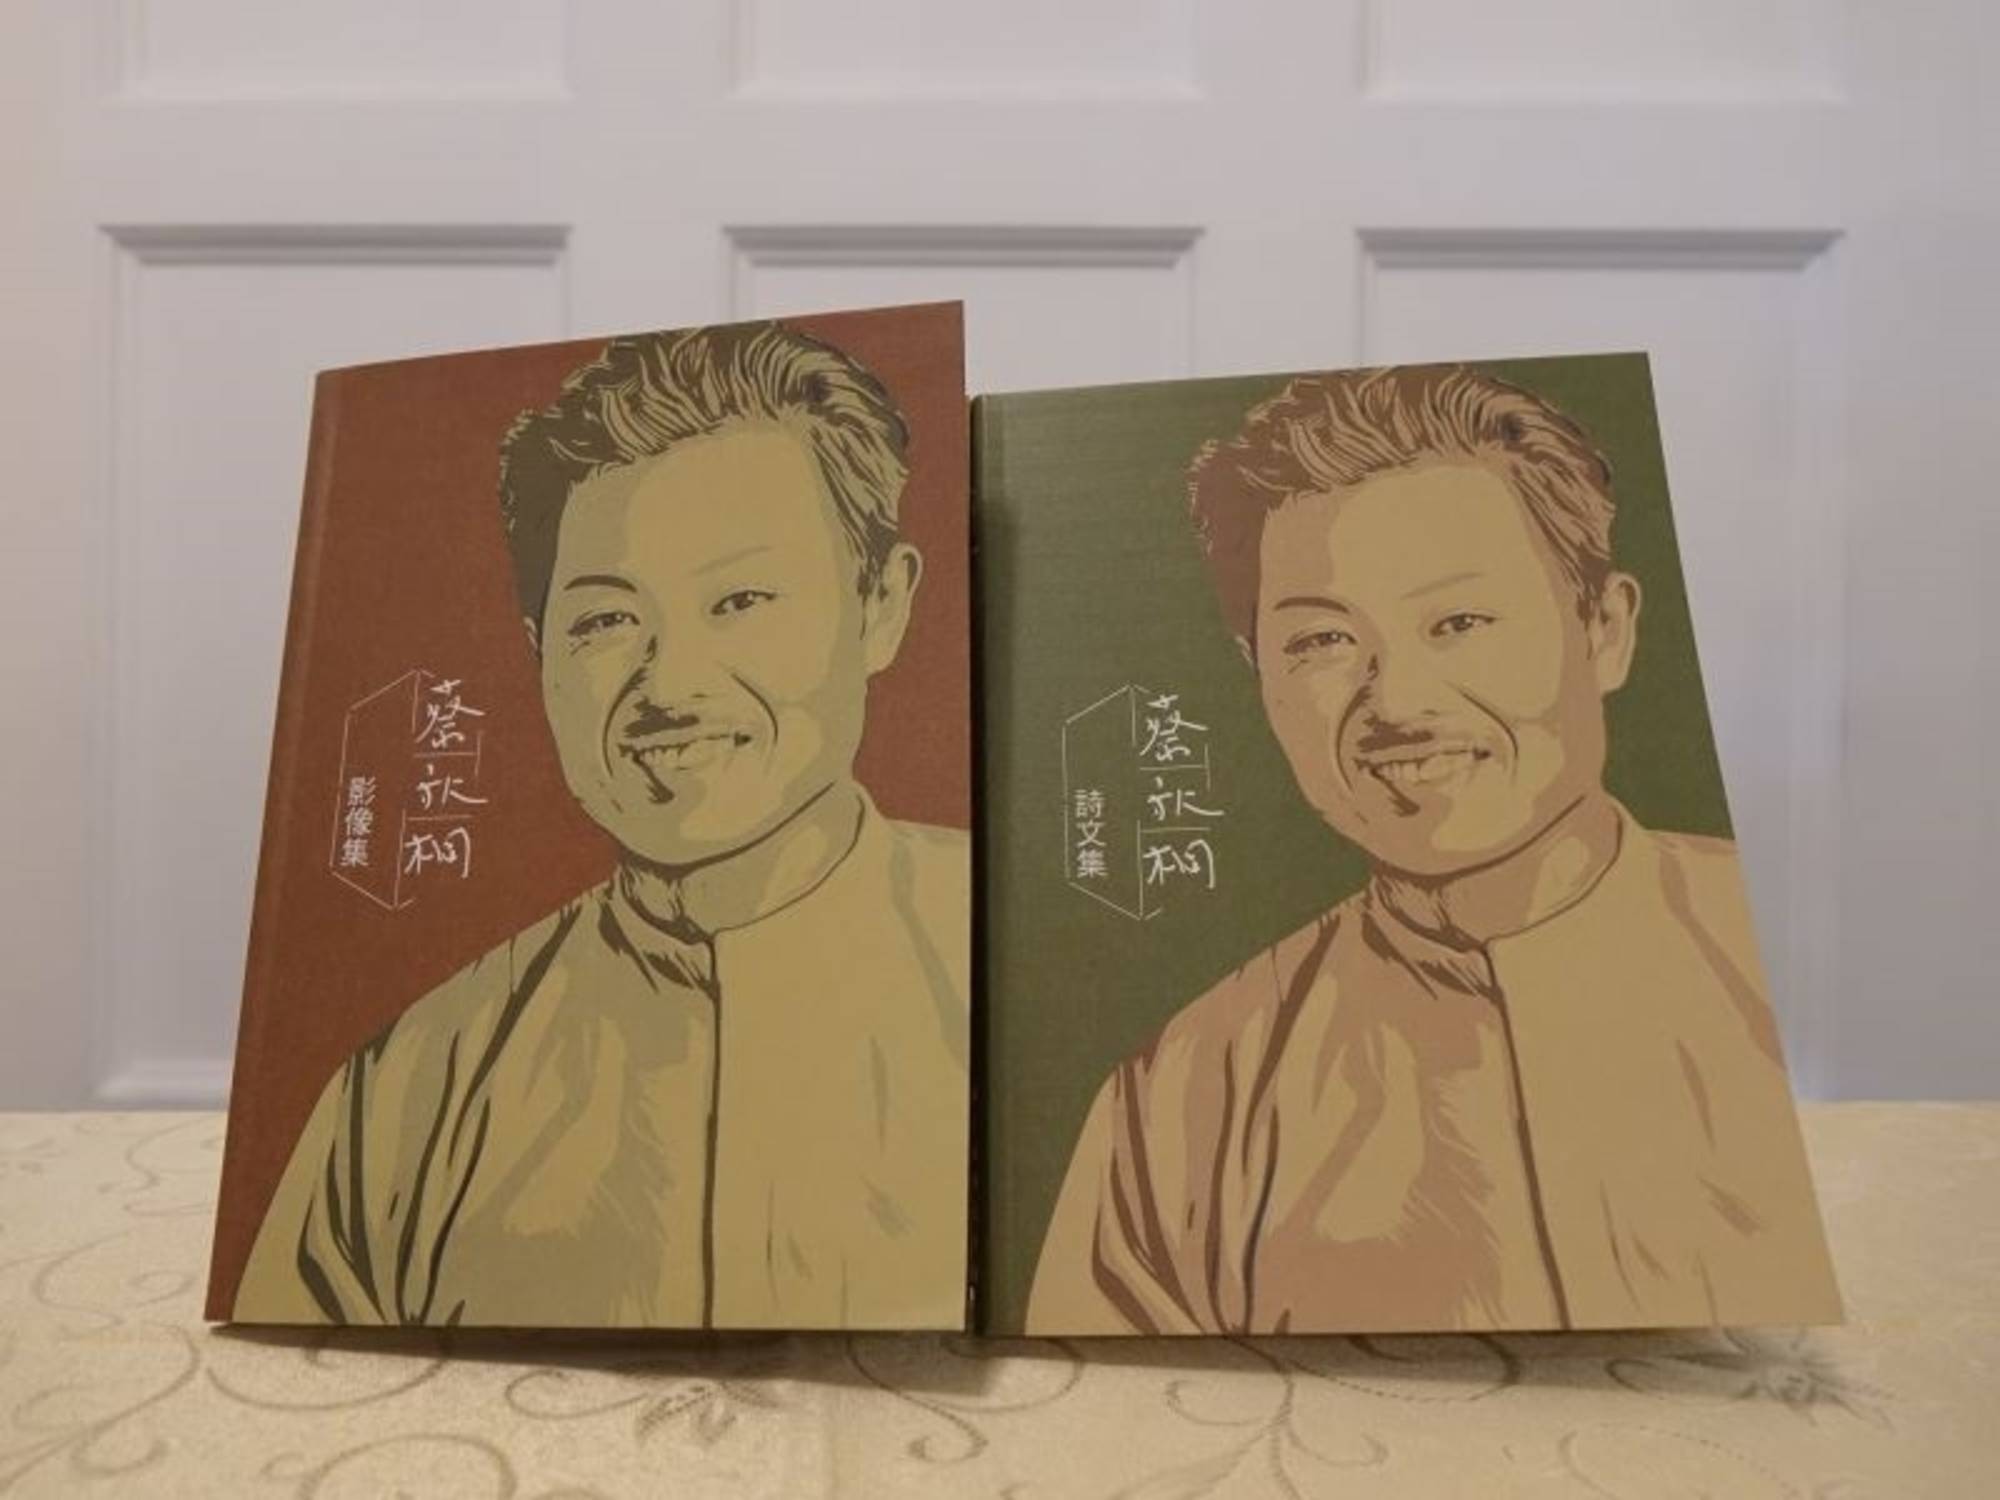 Taiwanese writer Tsai Chiu-tung's collections released